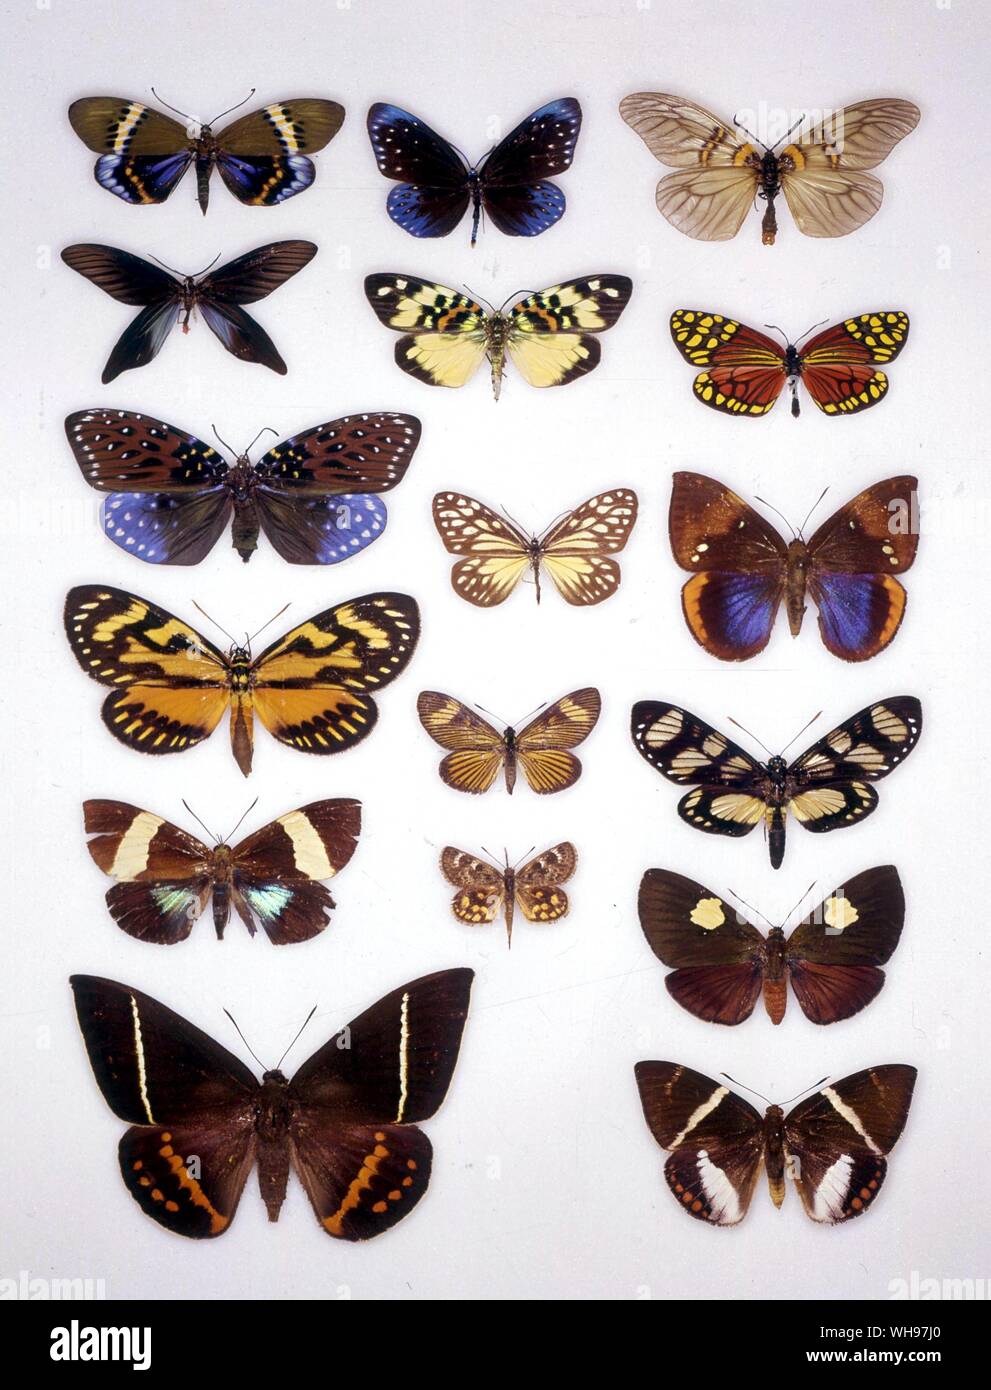 Butterflies/moths - left to right from the top - Eterusia repleta, Cyclosia midamia, Aglaope bifasciata, Gymnautocera rhodope, Erasmia pulchella, Campylotes desgodinsi, Erasmia sanguiflua, Cyclosia curiosa, Cyanostola diva, Zegara zagraevides, Riechia acraevides, Gazera linus, Neocastnia nicevillei, Synemon sophia, Enicospila marcus, Amauta cacia, Castnia licus Stock Photo